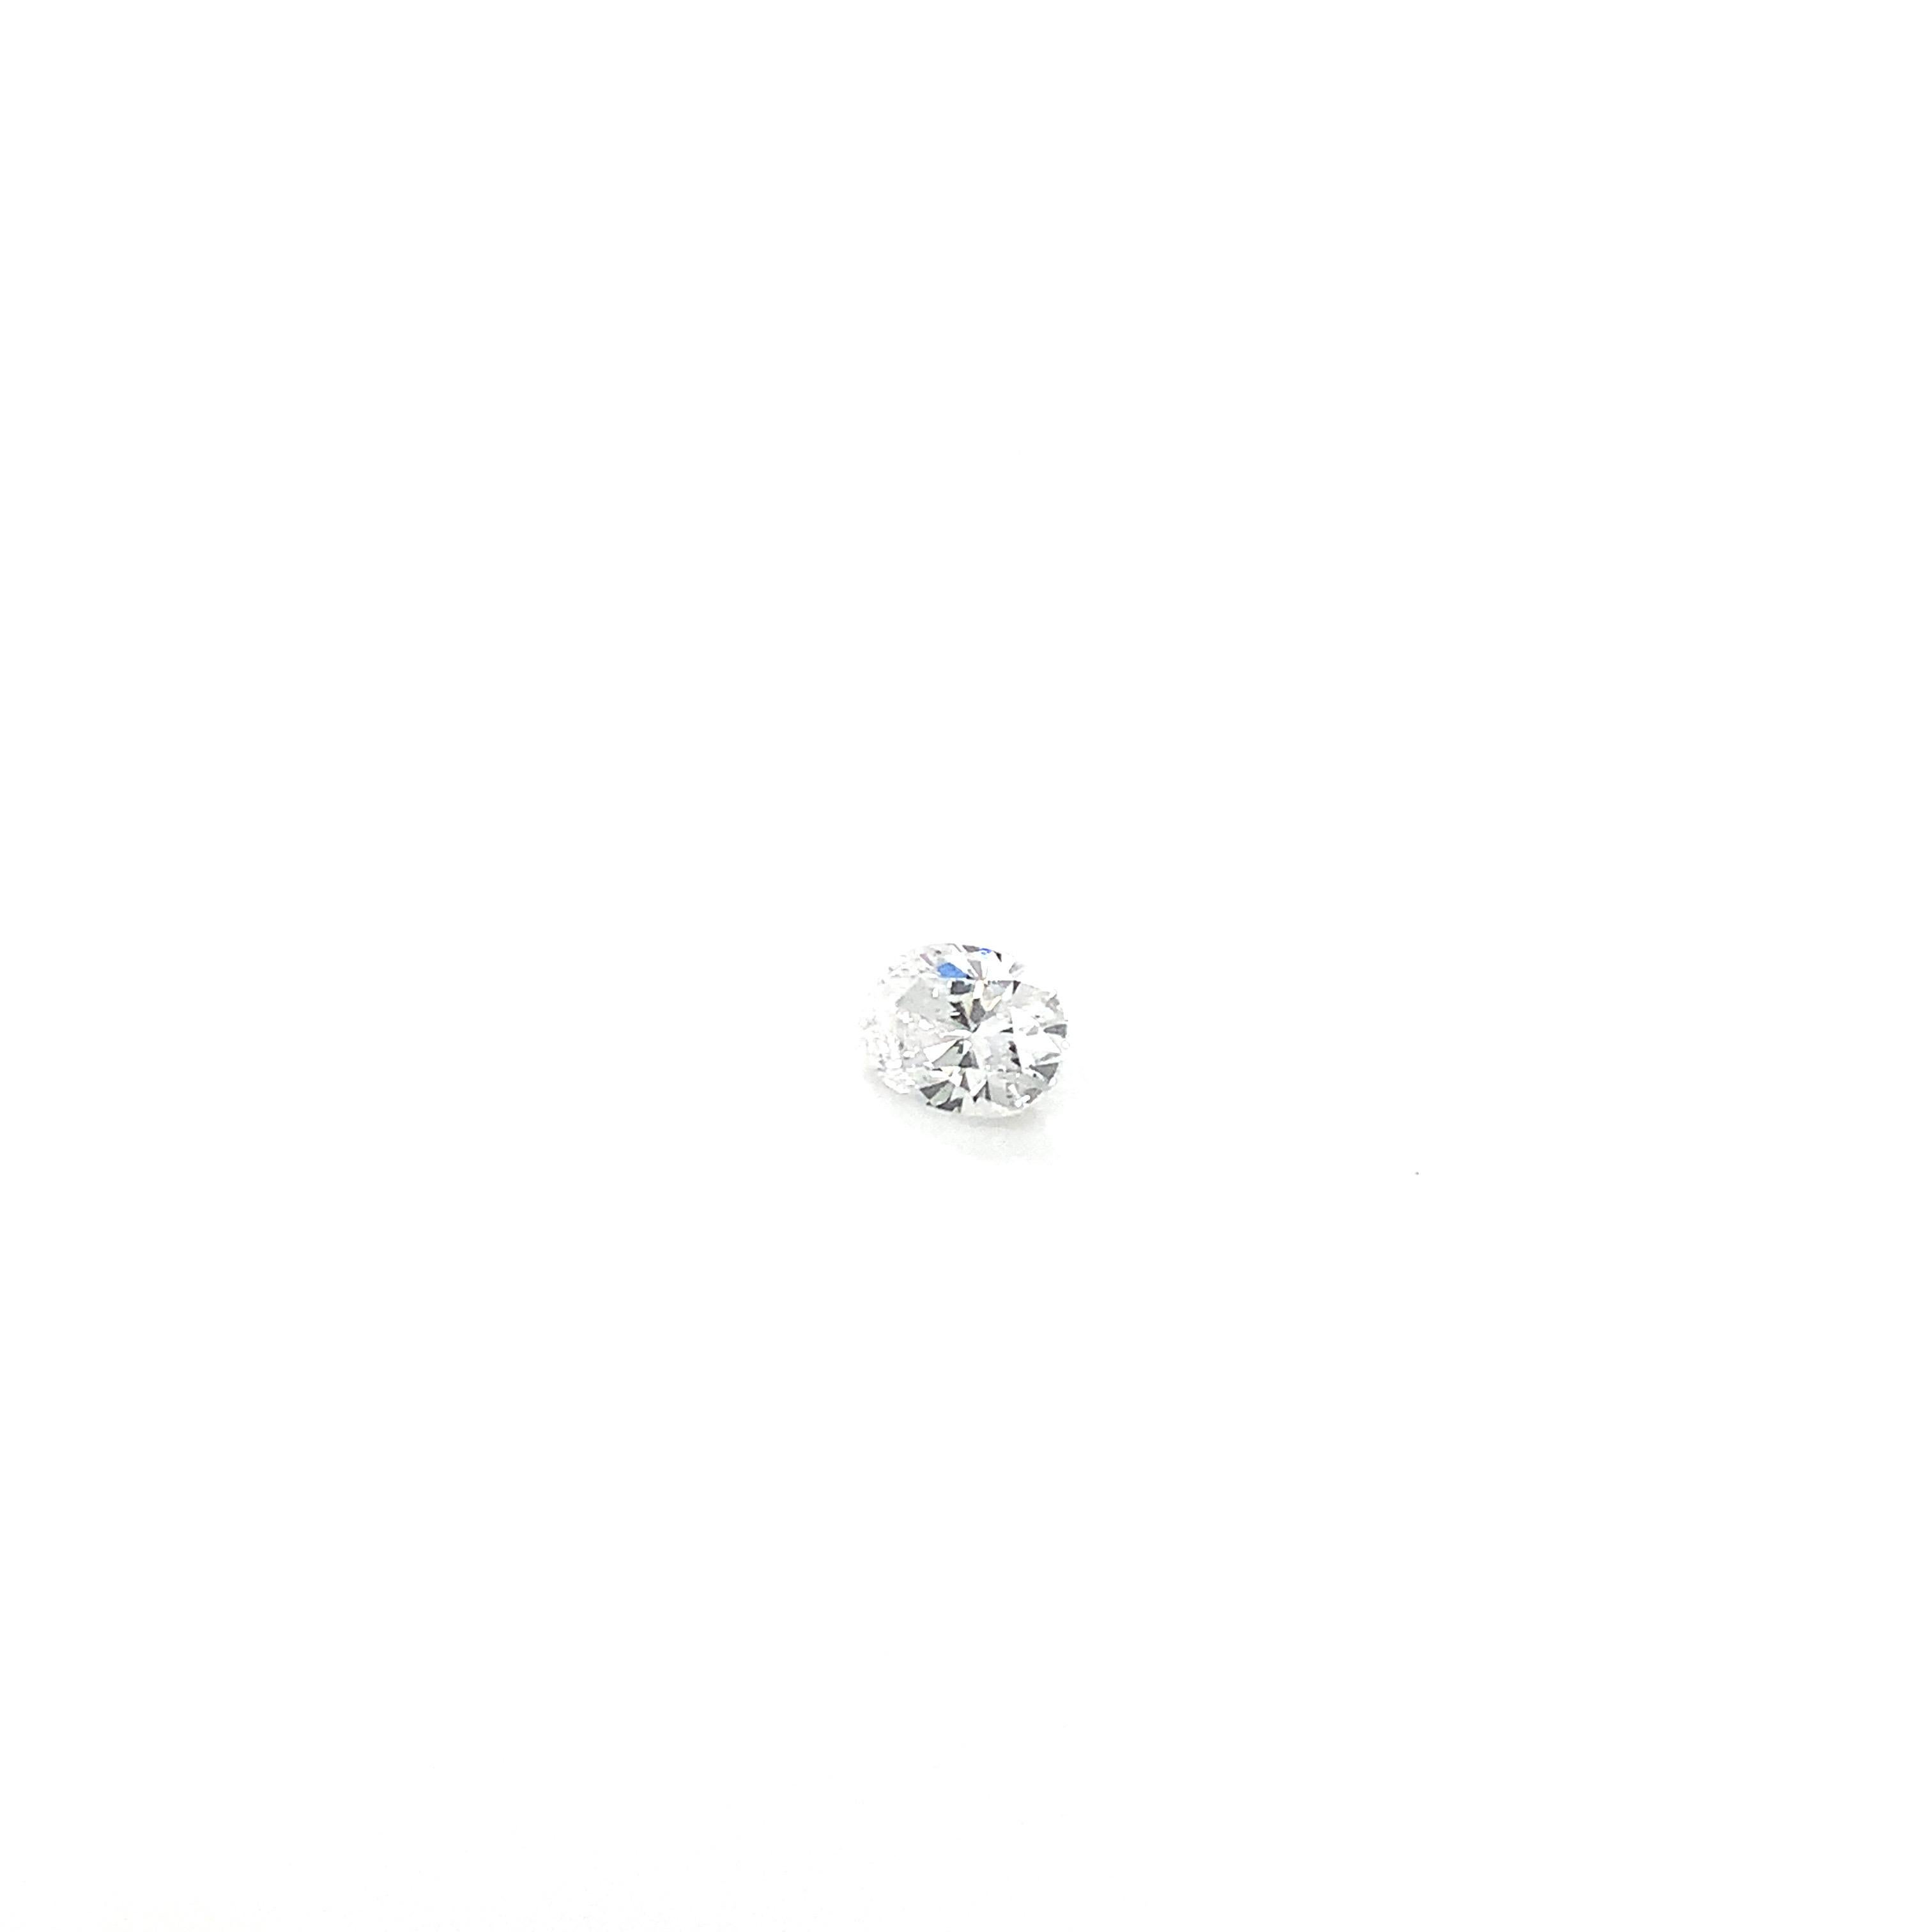 Oval Cut GIA Certified 0.36 Carat Oval Brilliant Diamond For Sale